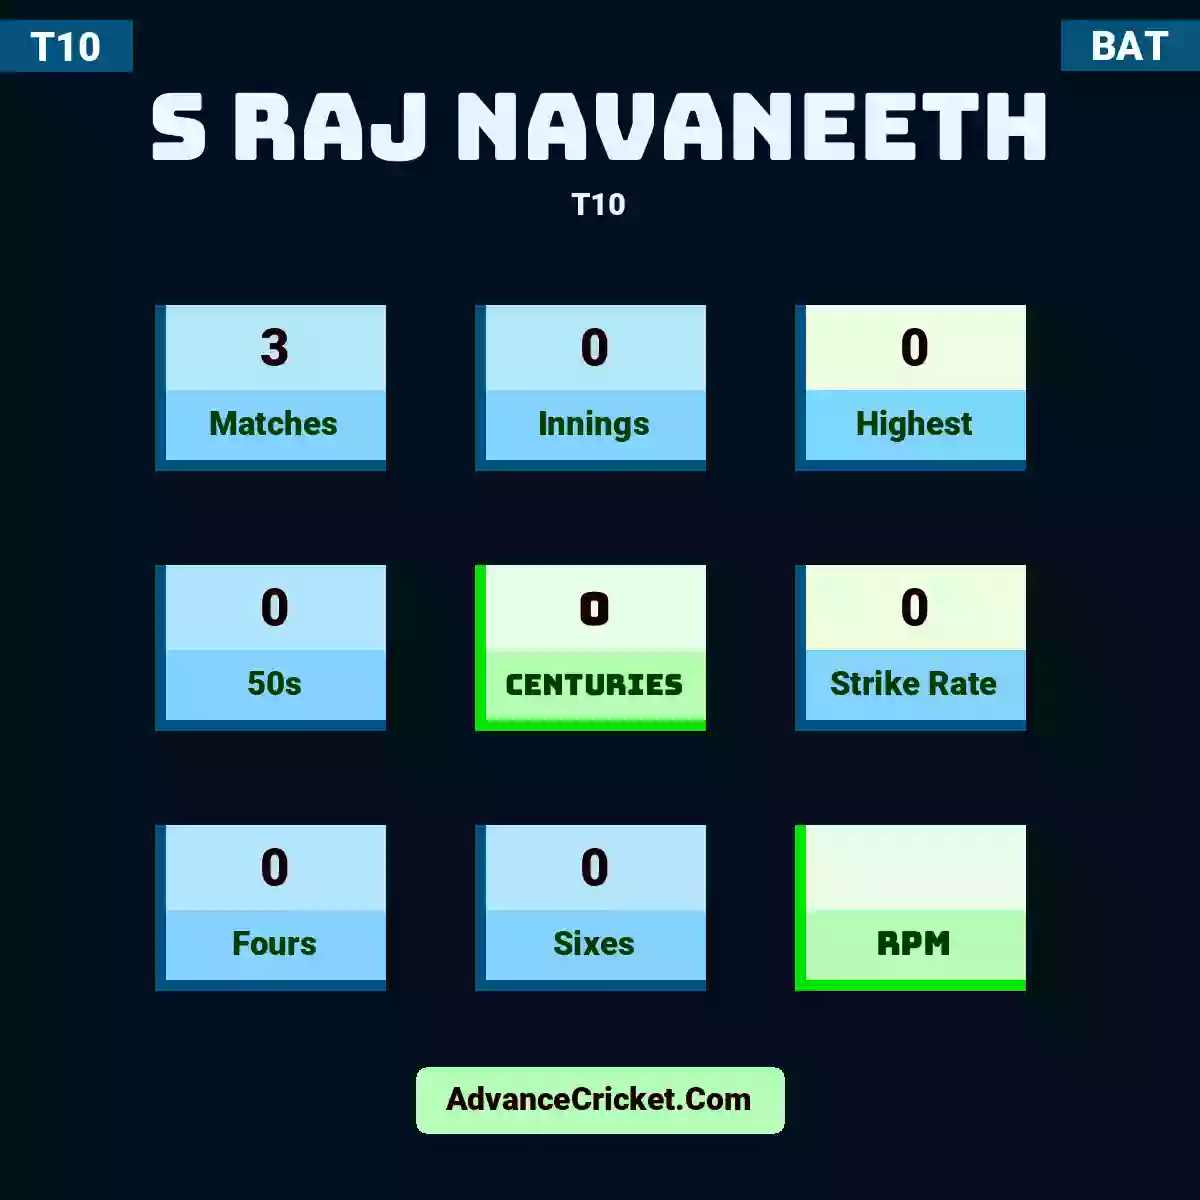 S Raj Navaneeth T10 , S Raj Navaneeth played 3 matches, scored 0 runs as highest, 0 half-centuries, and 0 centuries, with a strike rate of 0. S.Raj.Navaneeth hit 0 fours and 0 sixes.